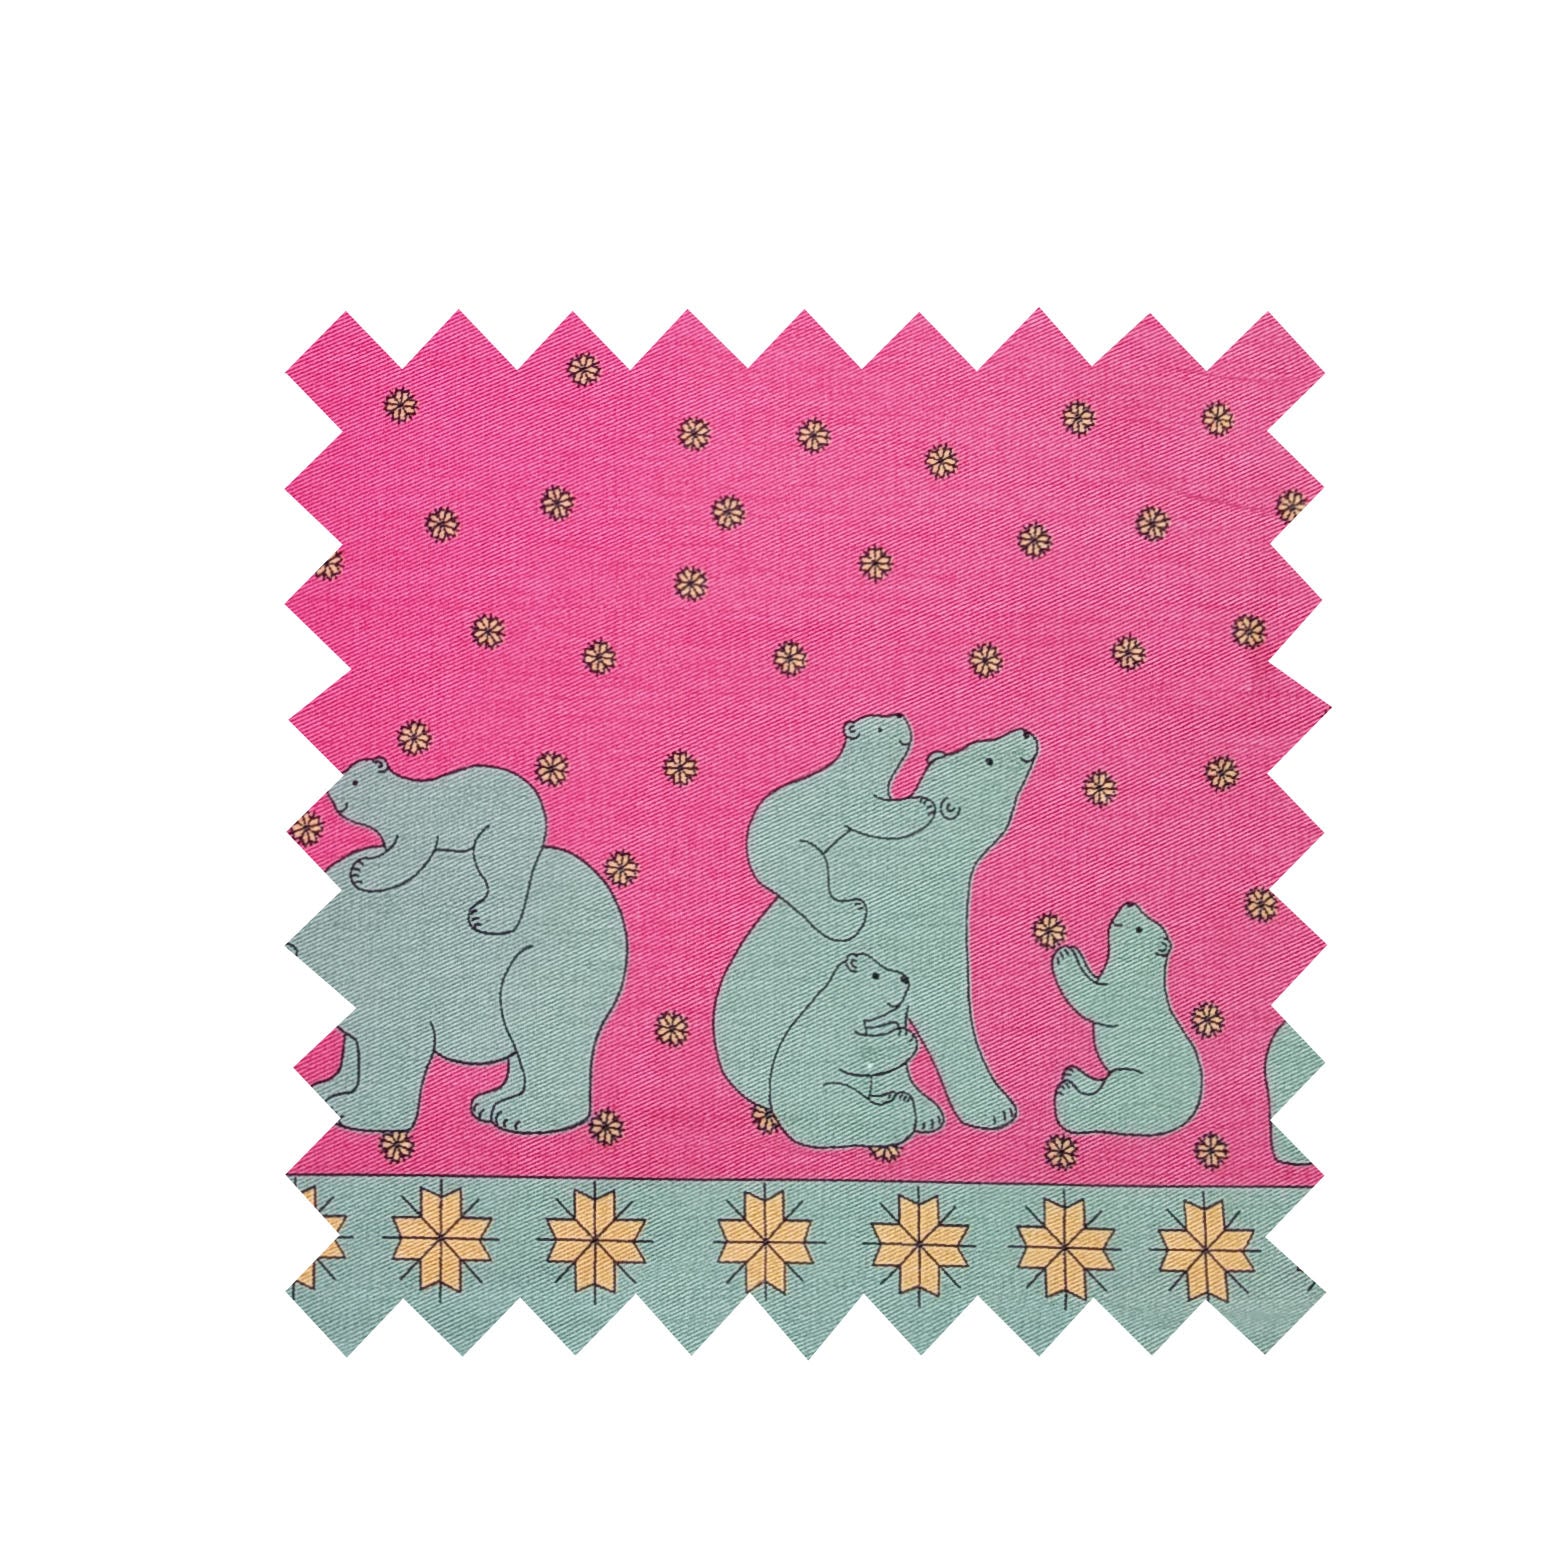 Remnant - 2.4m - Pink/Green Polar Bear Fabric - Cotton twill